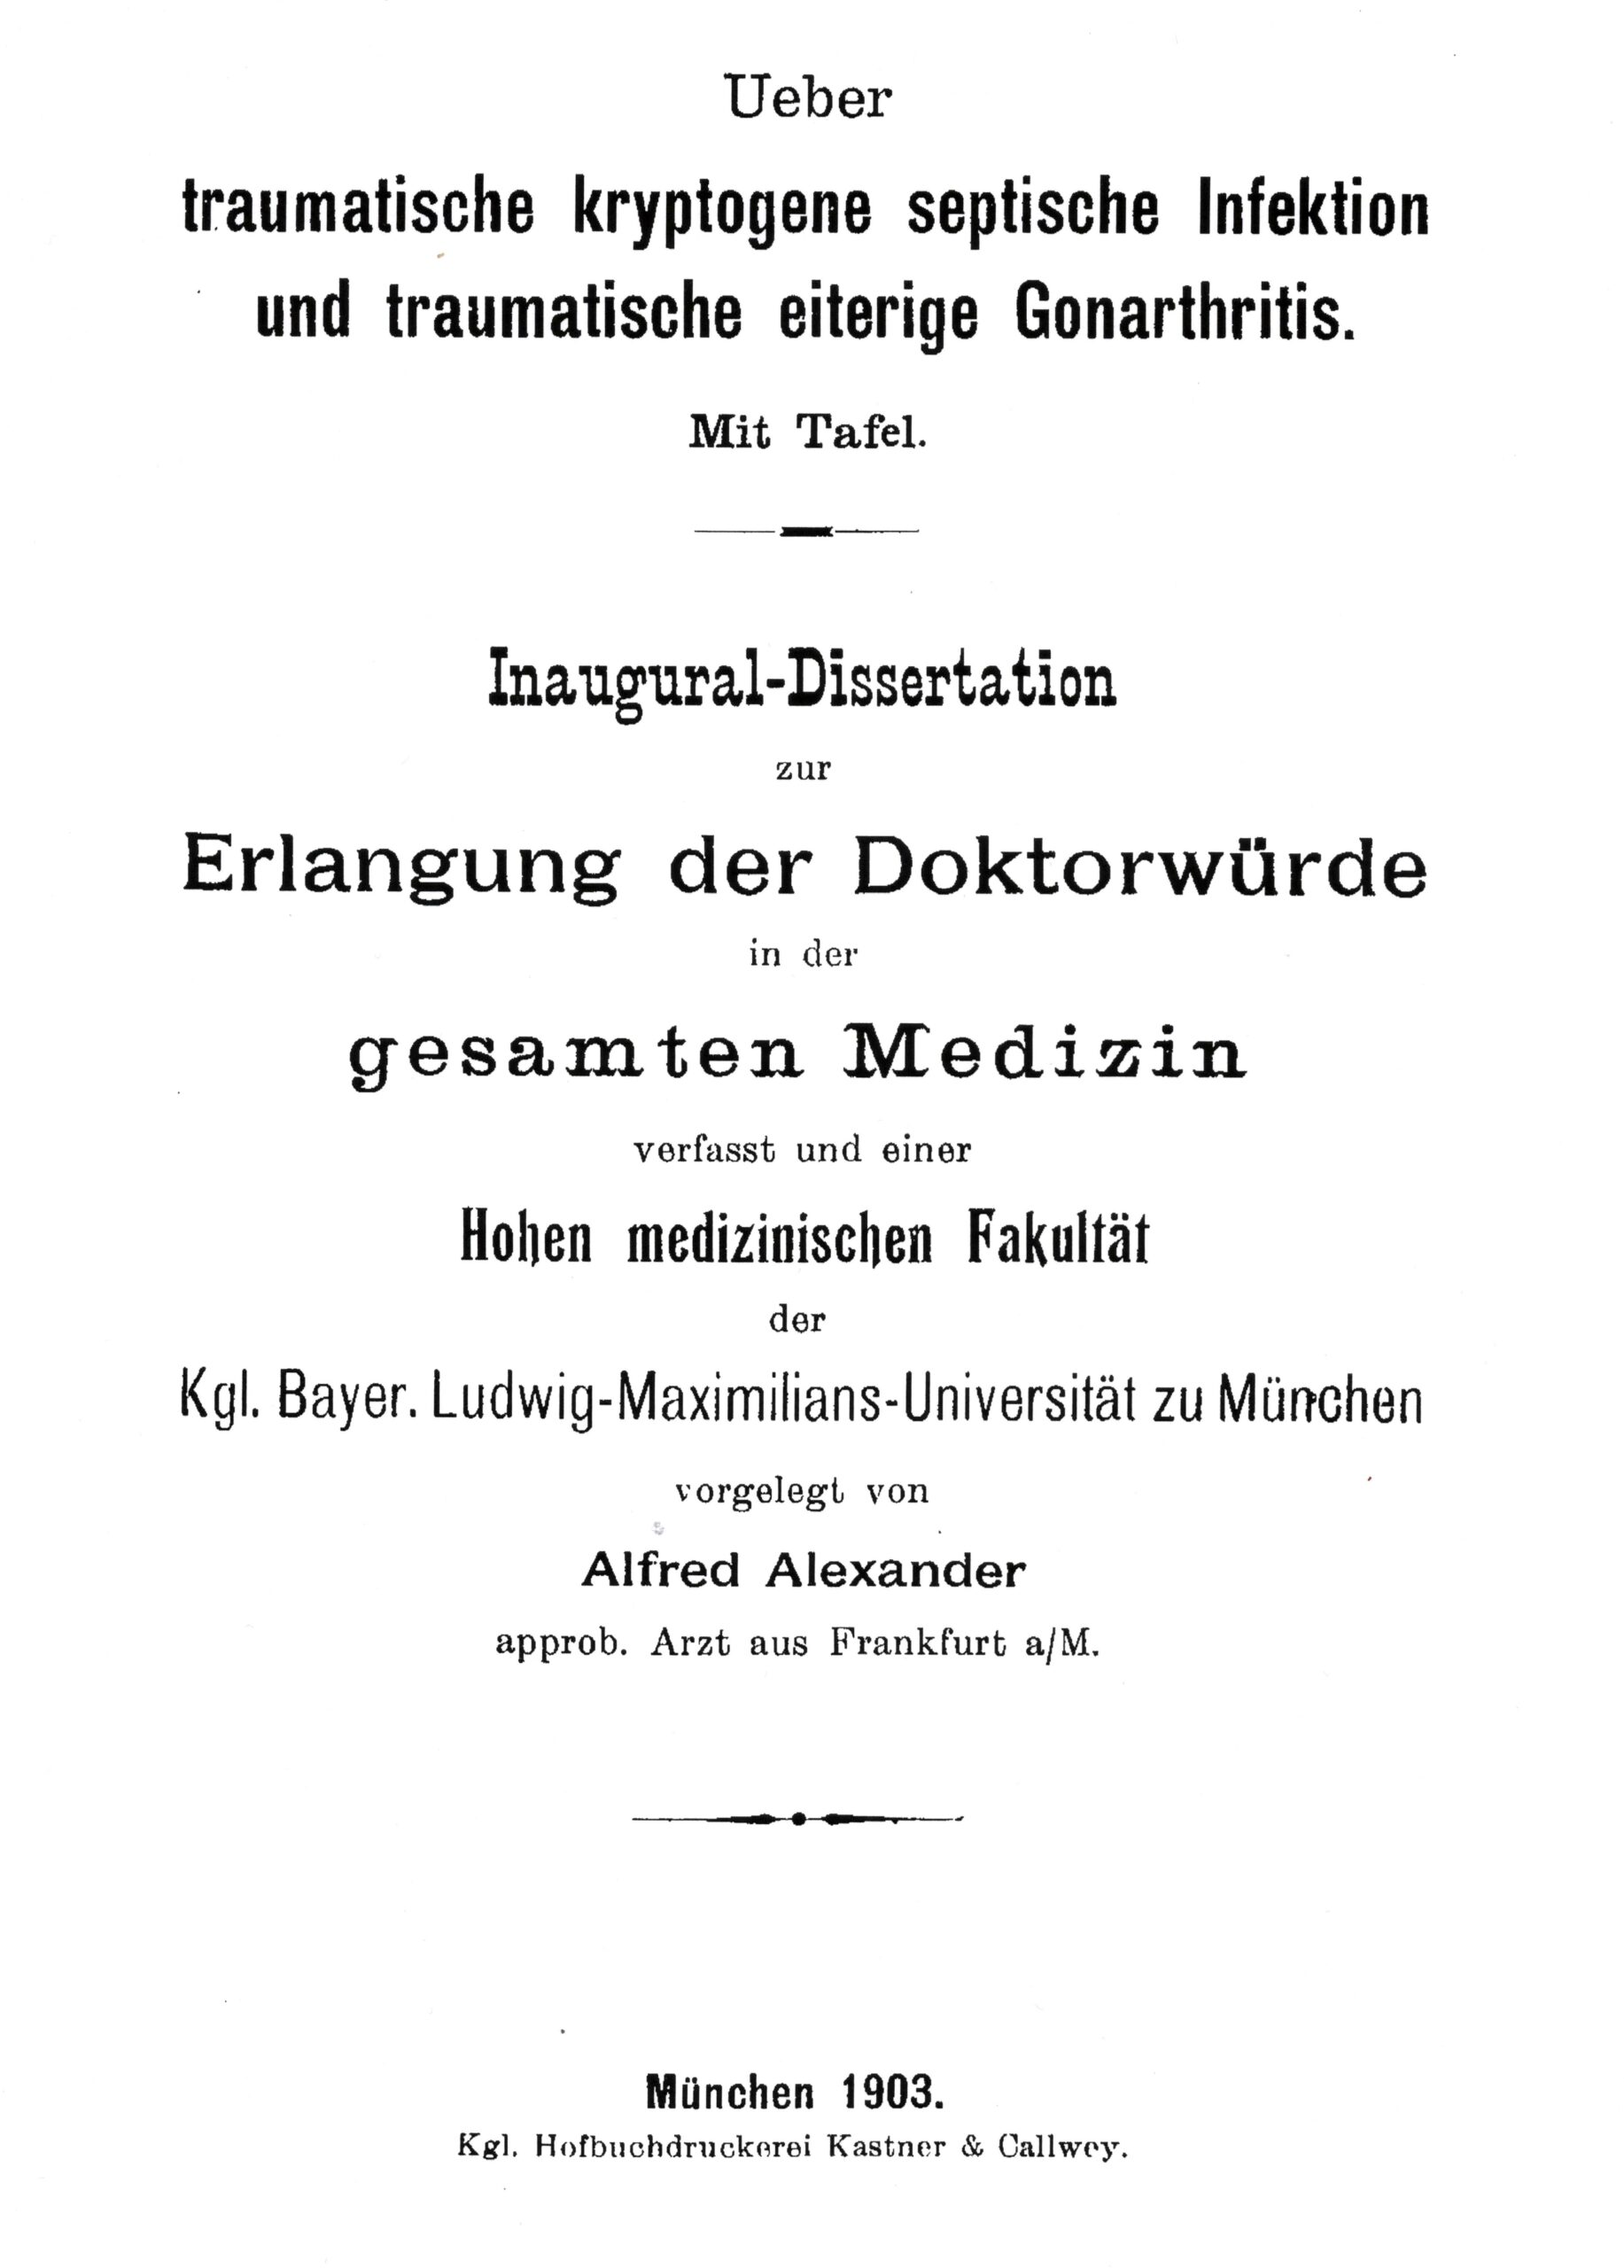 Dissertation, München 1903, Kopie Titelblatt, Archiv H Je